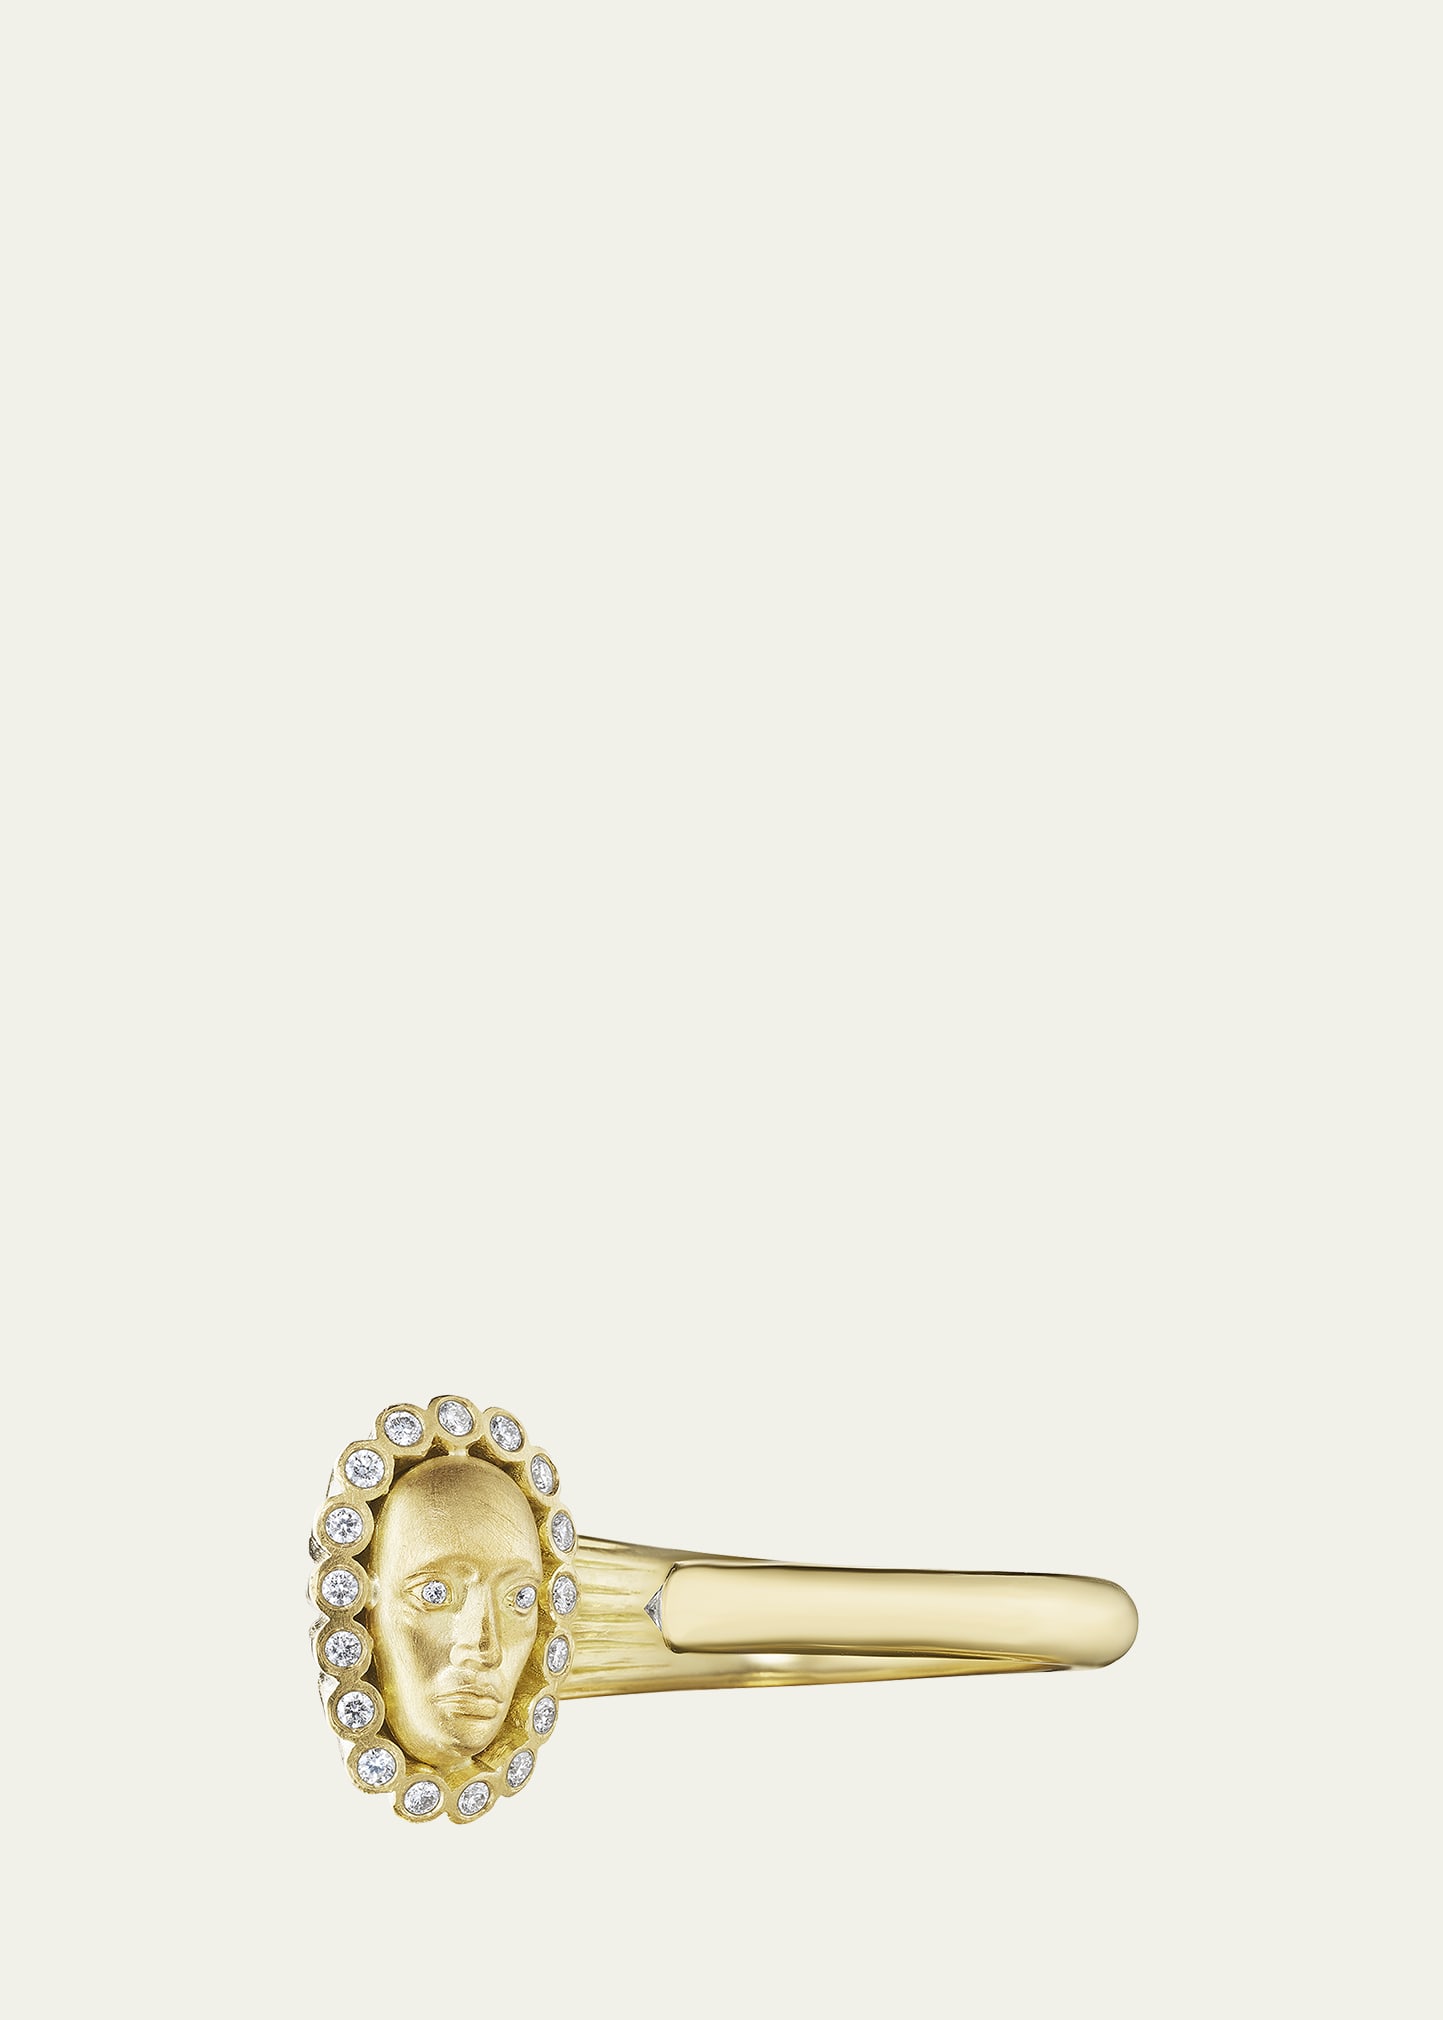 Vulcana Comet Flower Ring in 18K Gold with Diamonds